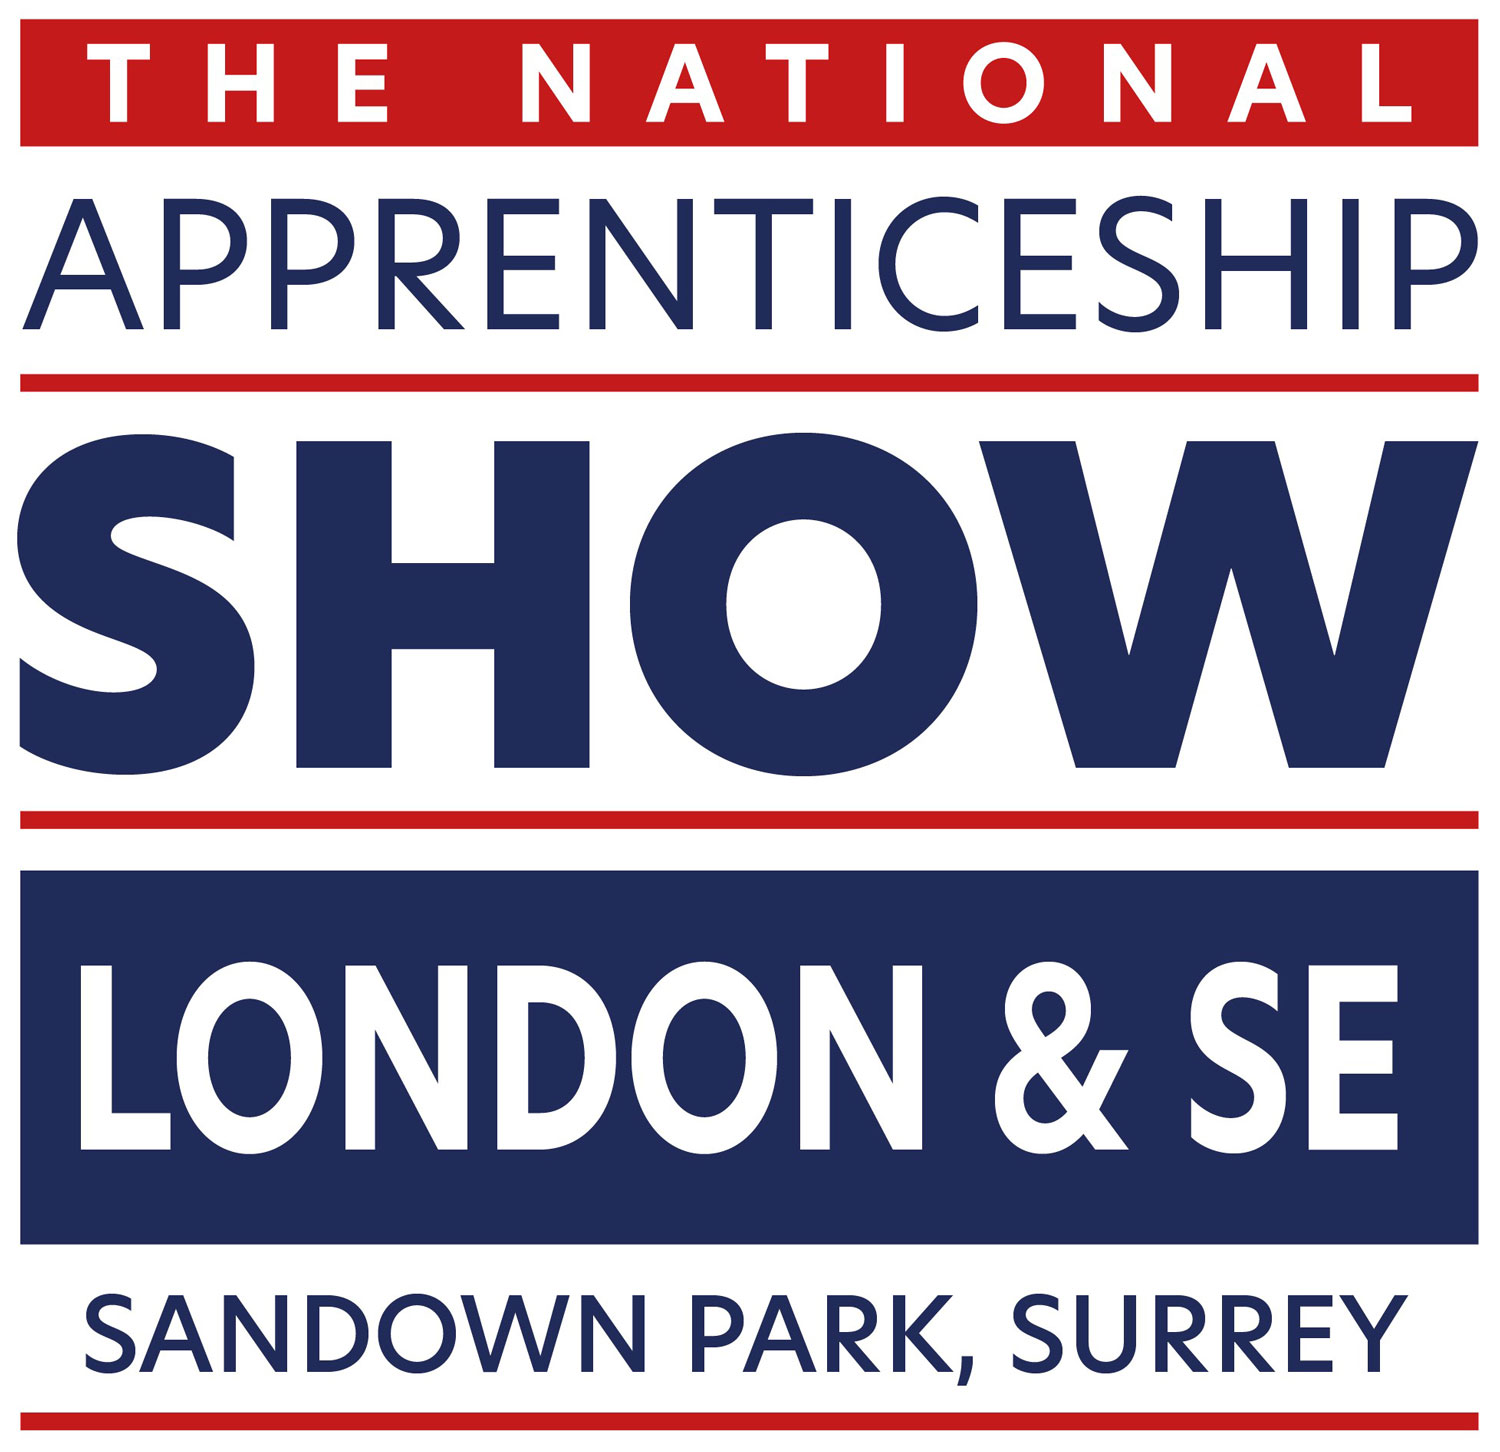 National Apprenticeship Show London SE